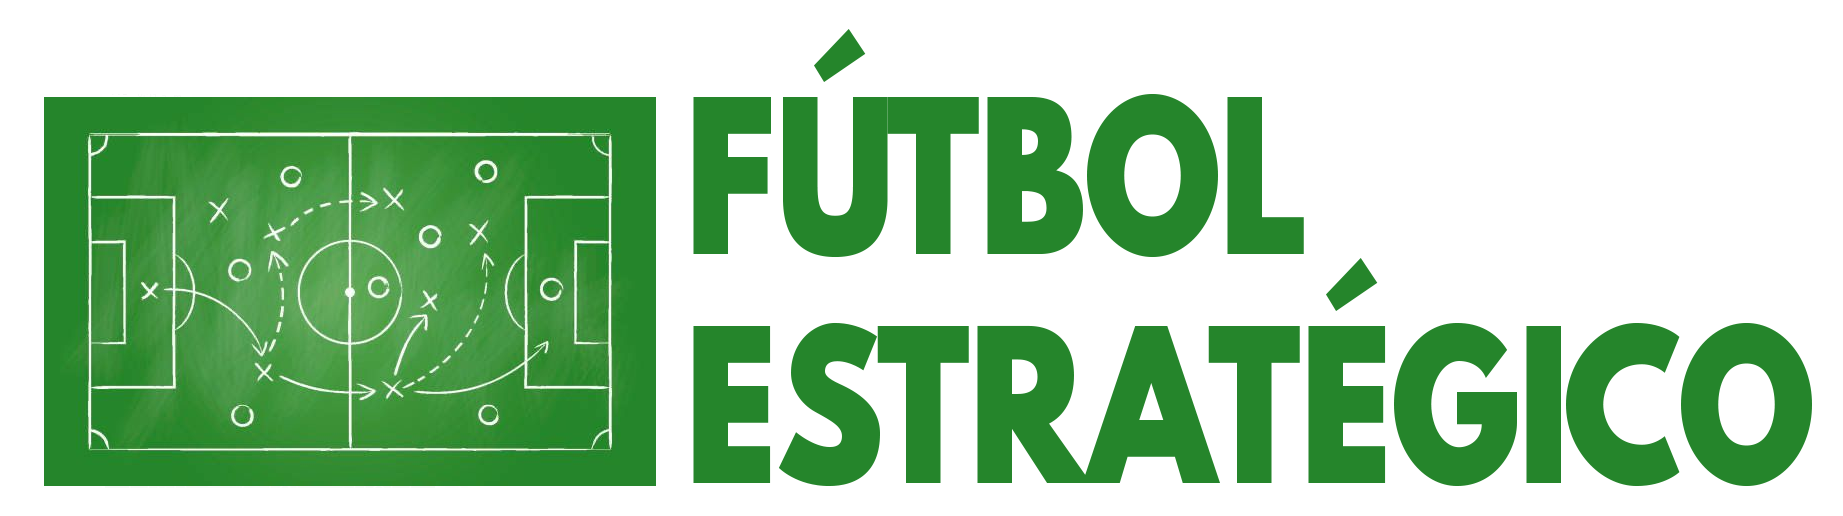 Logo EDITABLE - FutbolEstrategico.com